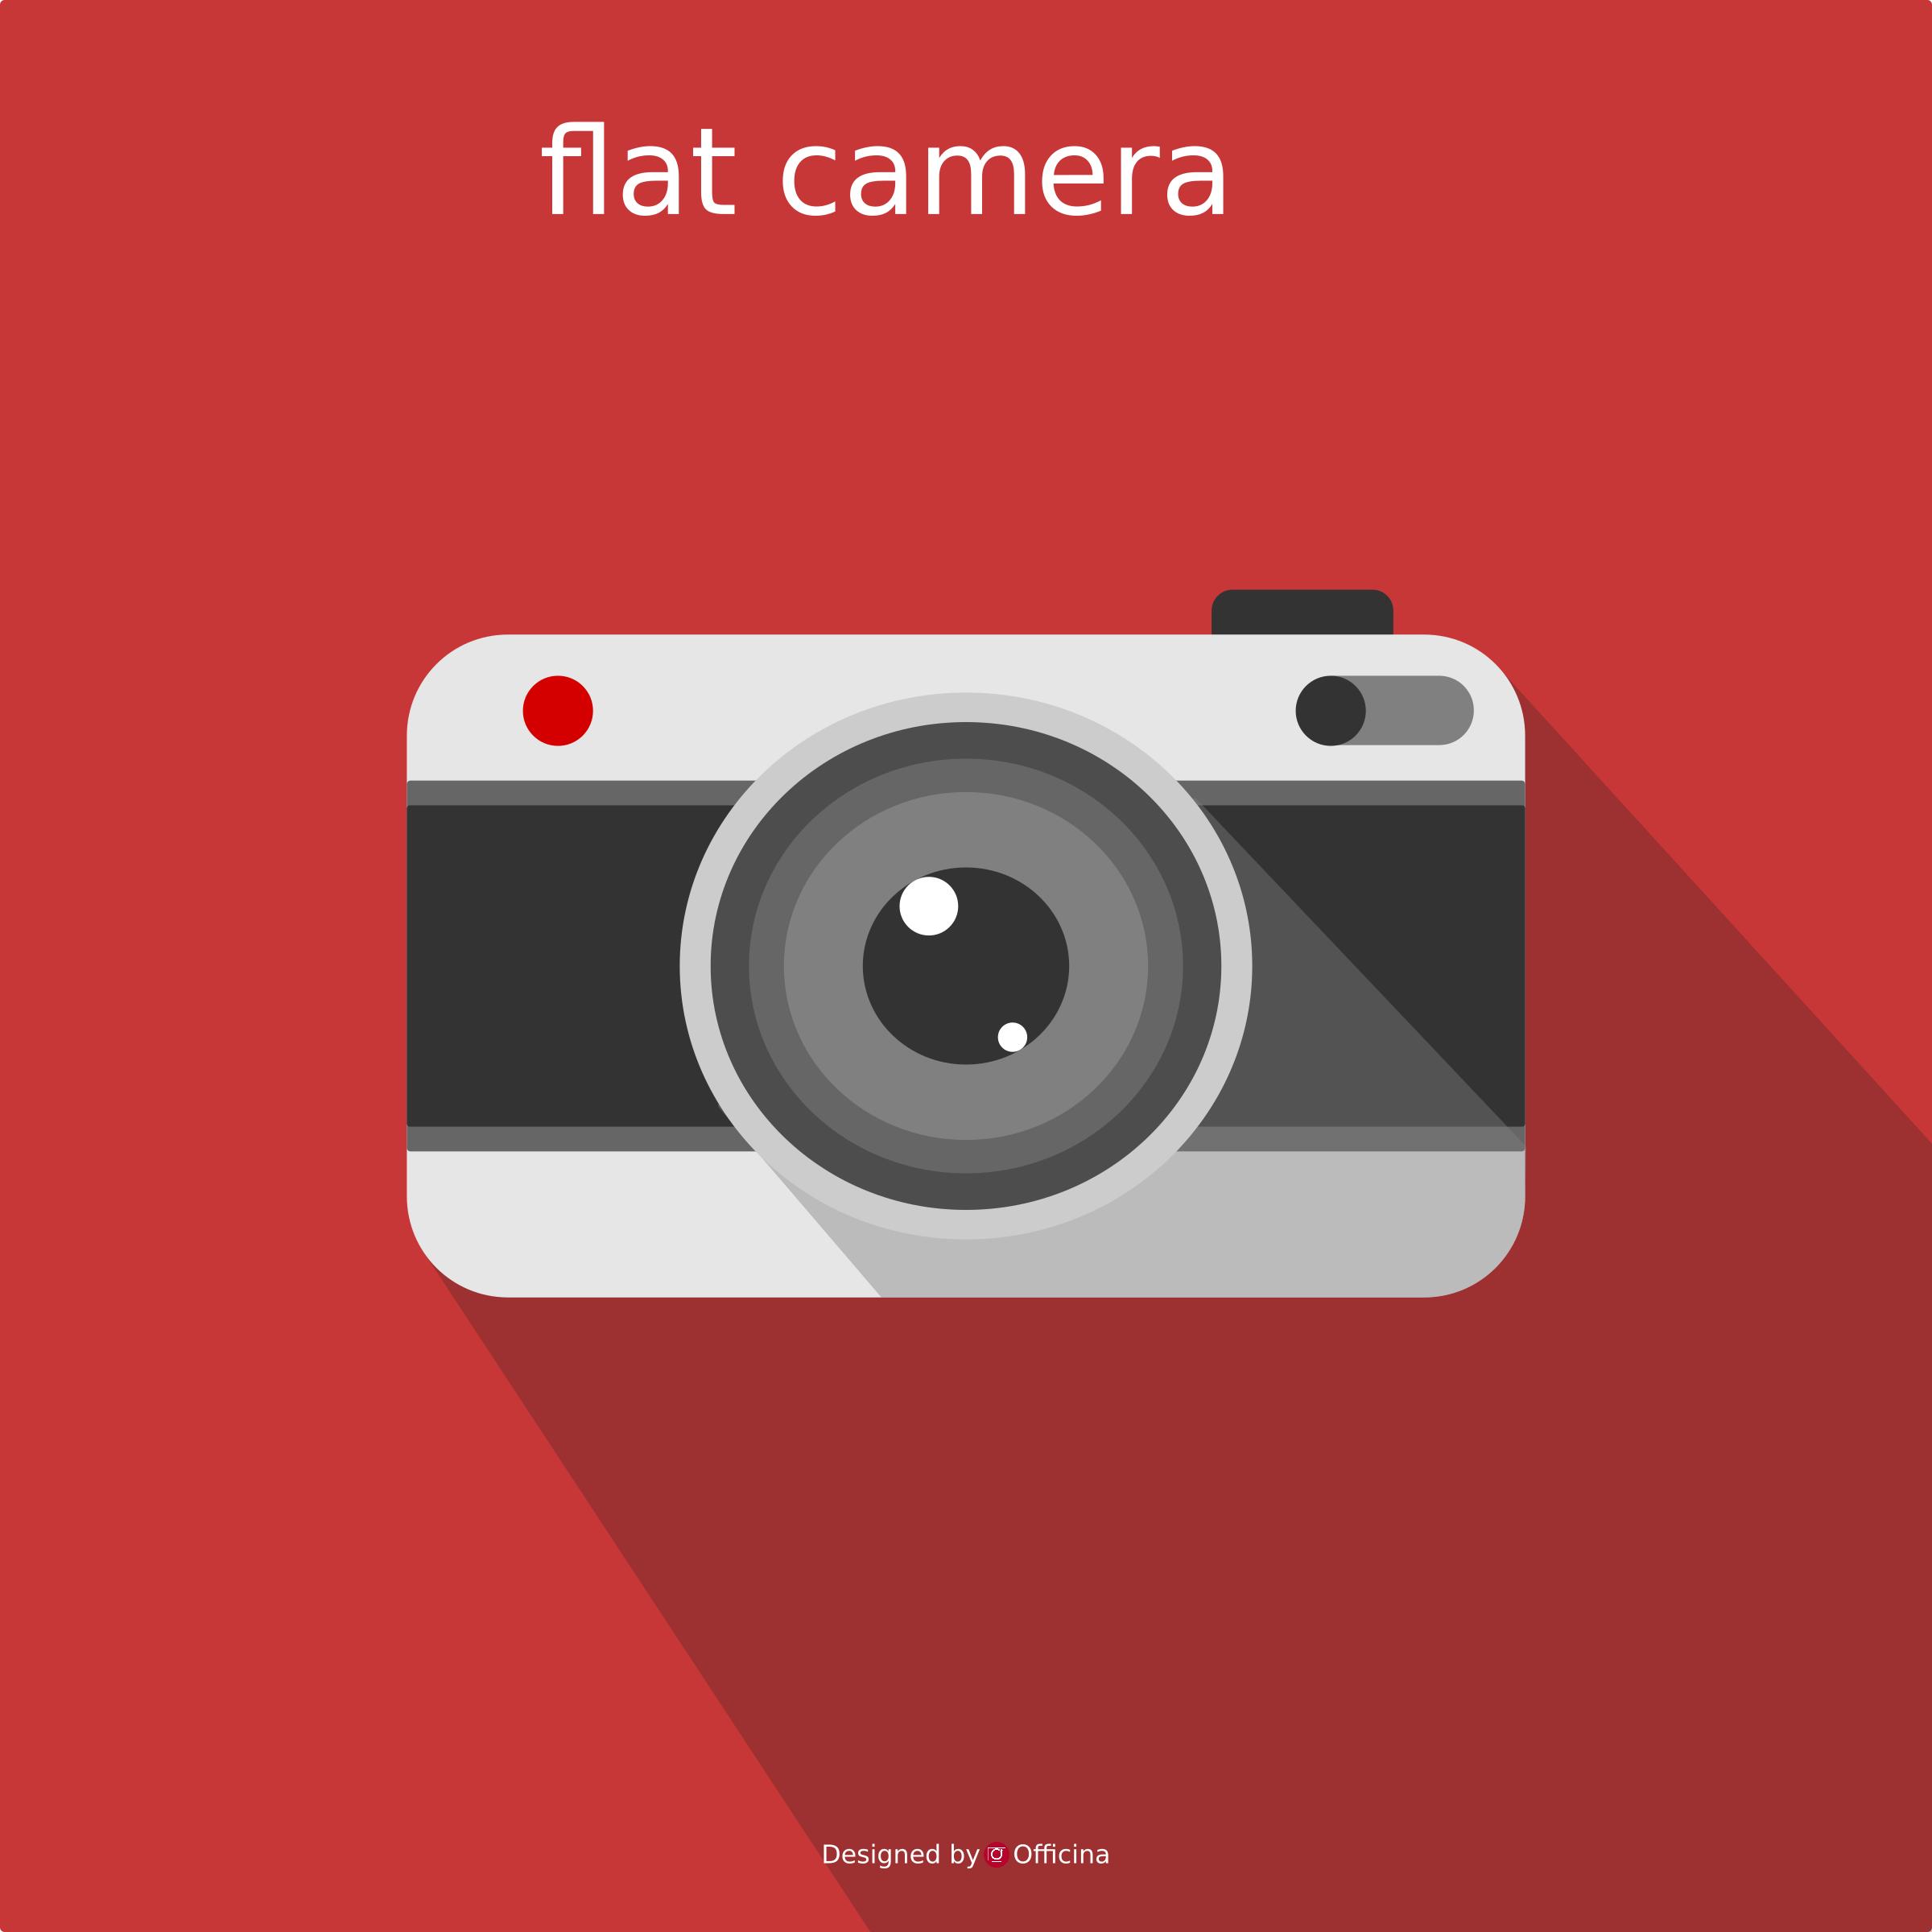 Flat camera PNG icons